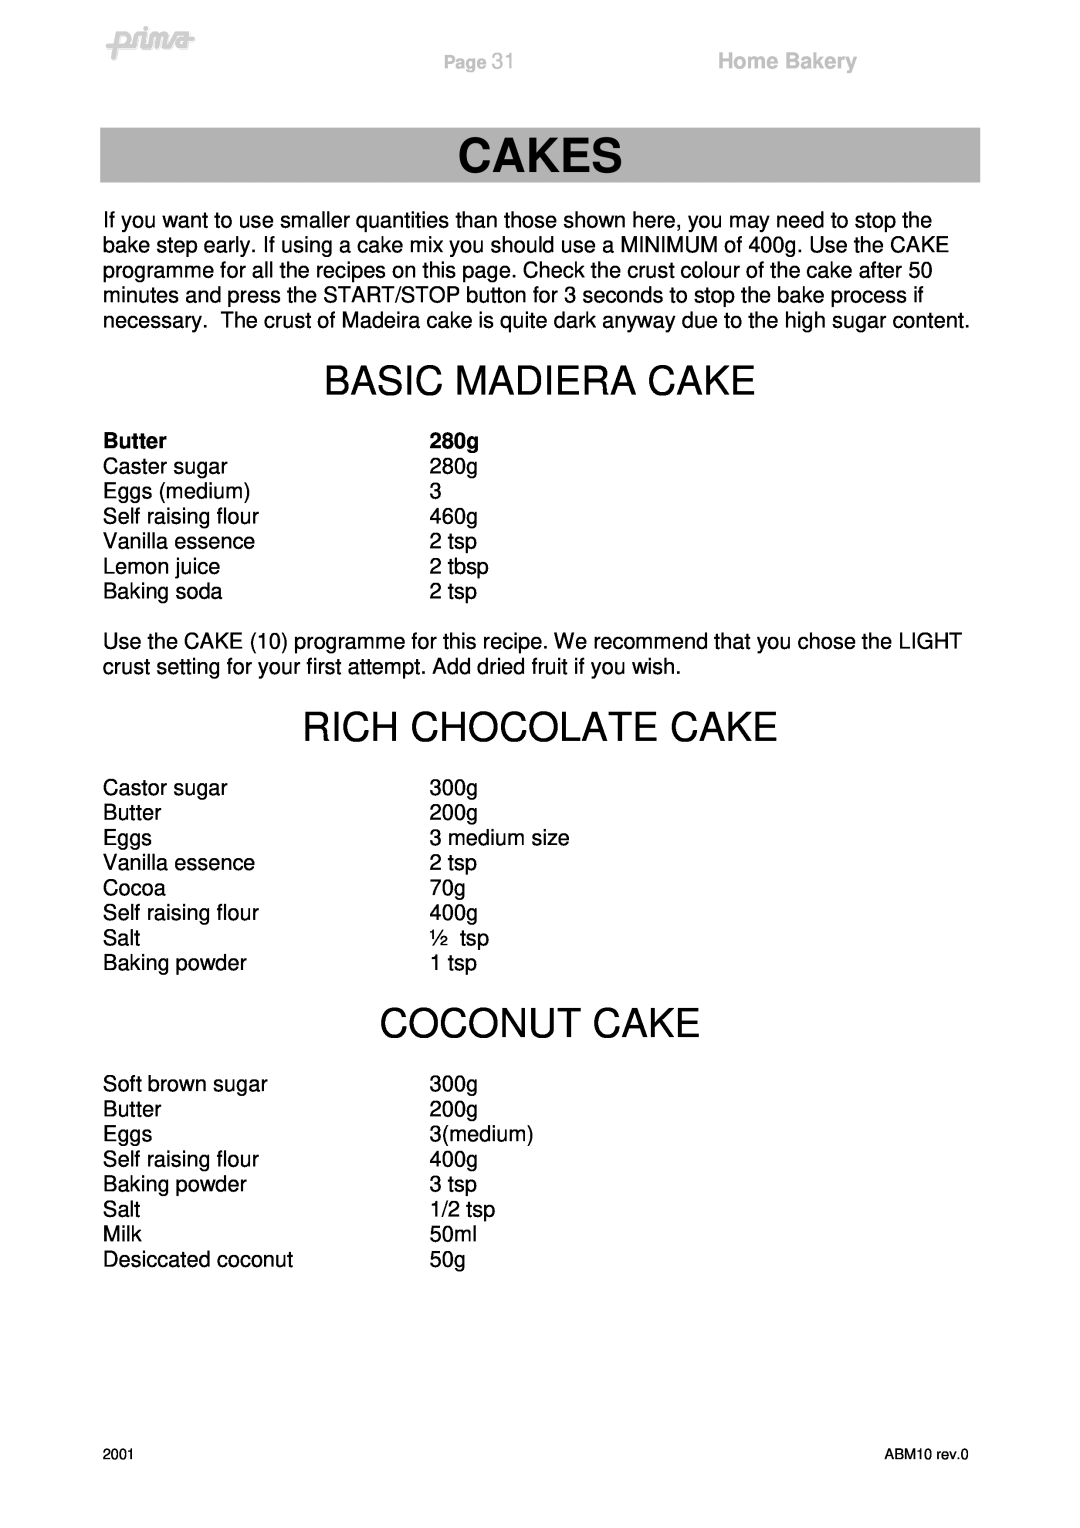 Prima ABM10 instruction manual Basic Madiera Cake, Rich Chocolate Cake, Coconut Cake, Cakes, Home Bakery, Butter, 280g 